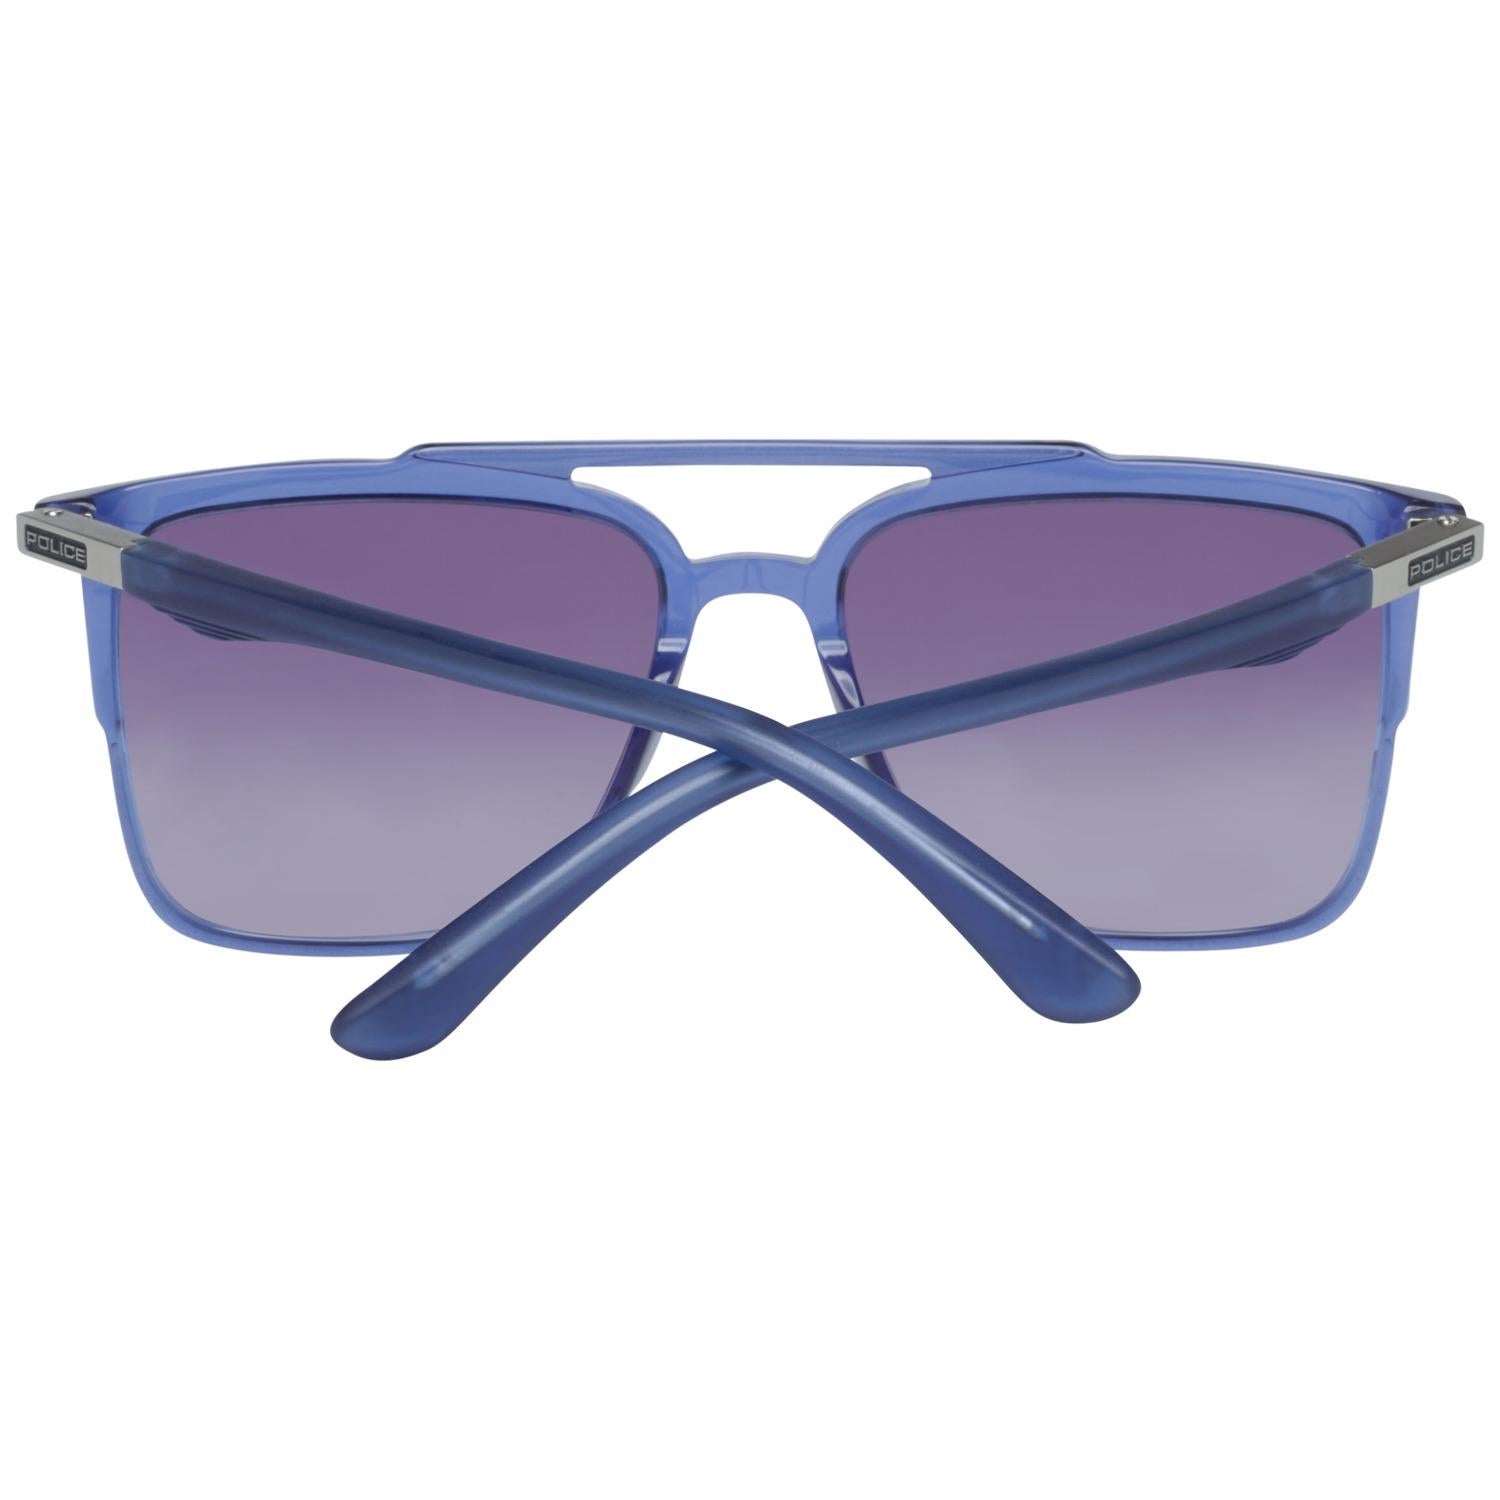 Police Mint Unisex Blue Sunglasses SPL363 560955 56-18-145 mm 2